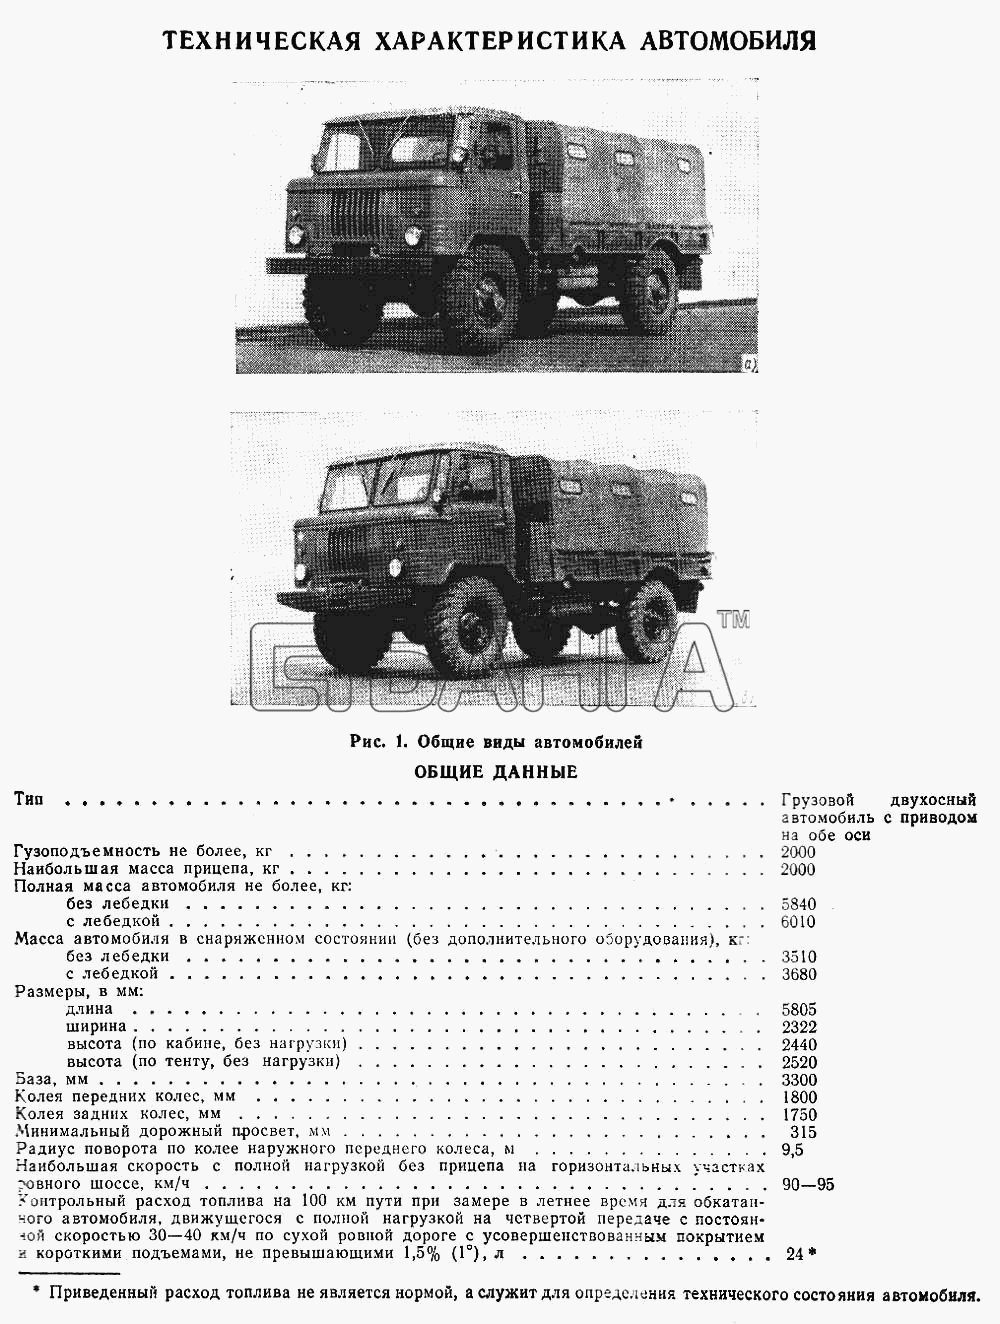 ГАЗ ГАЗ-66 (Каталог 1983 г.) Схема Лист 1 banga.ua